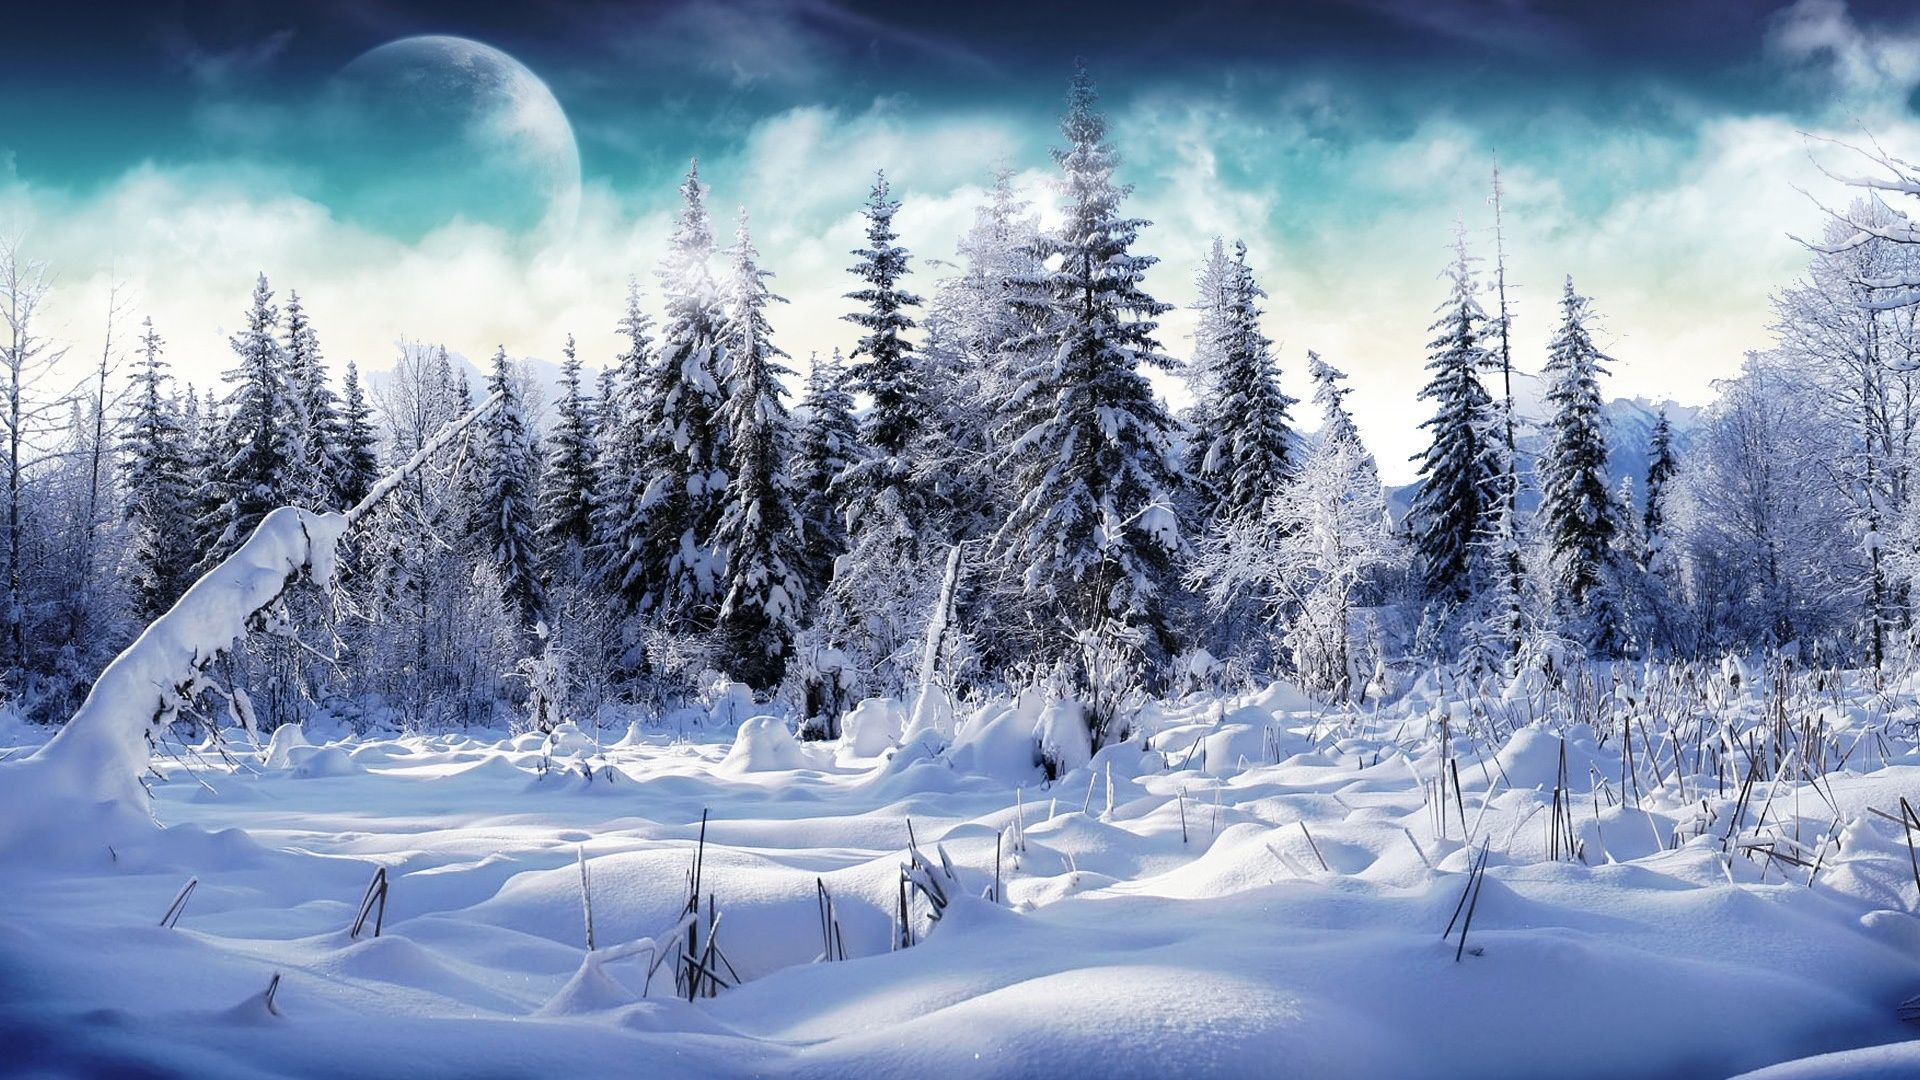 1080p Snow Wallpaper Top Background